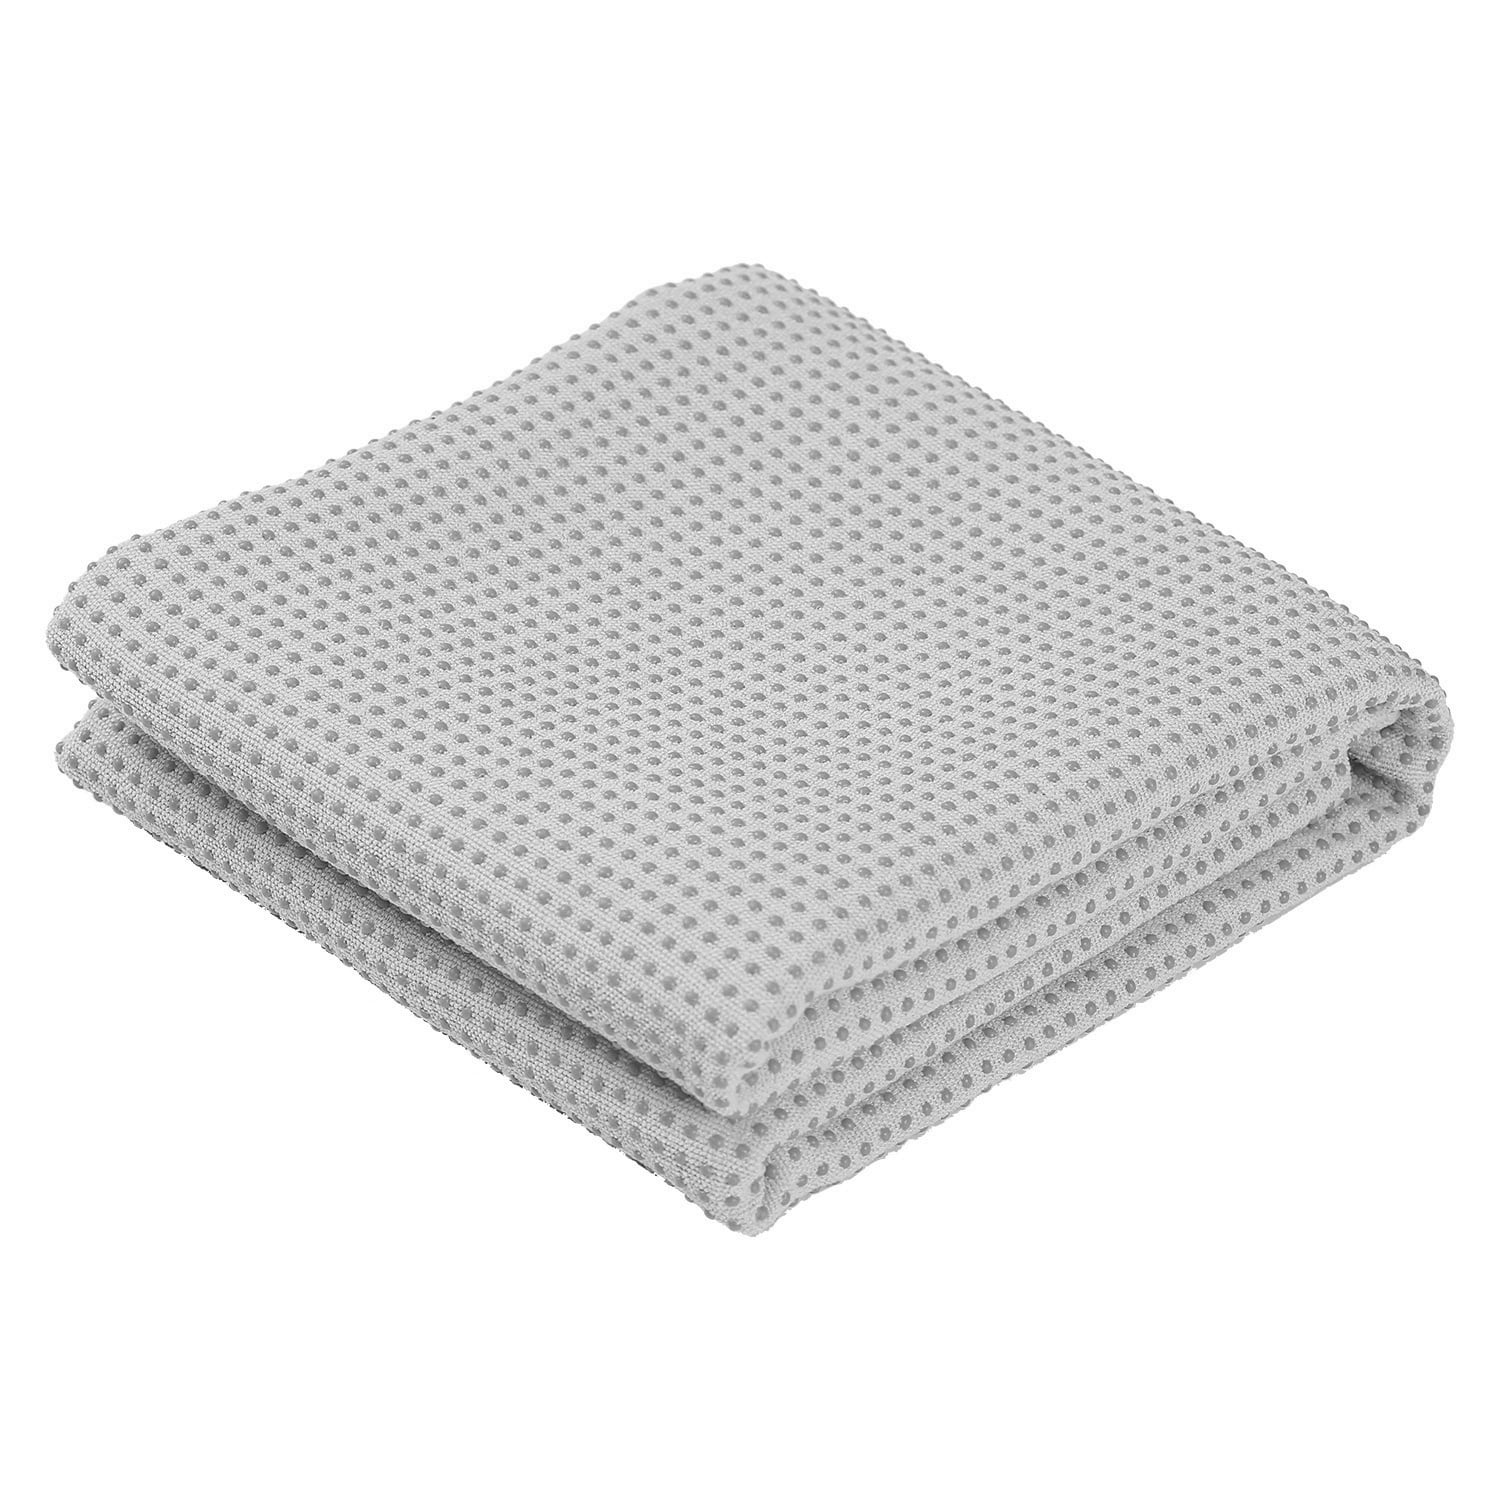 Yoga Towel Anti-slip Fitness Exercise Sports Carpet Super Absorbent Blanket Mat 